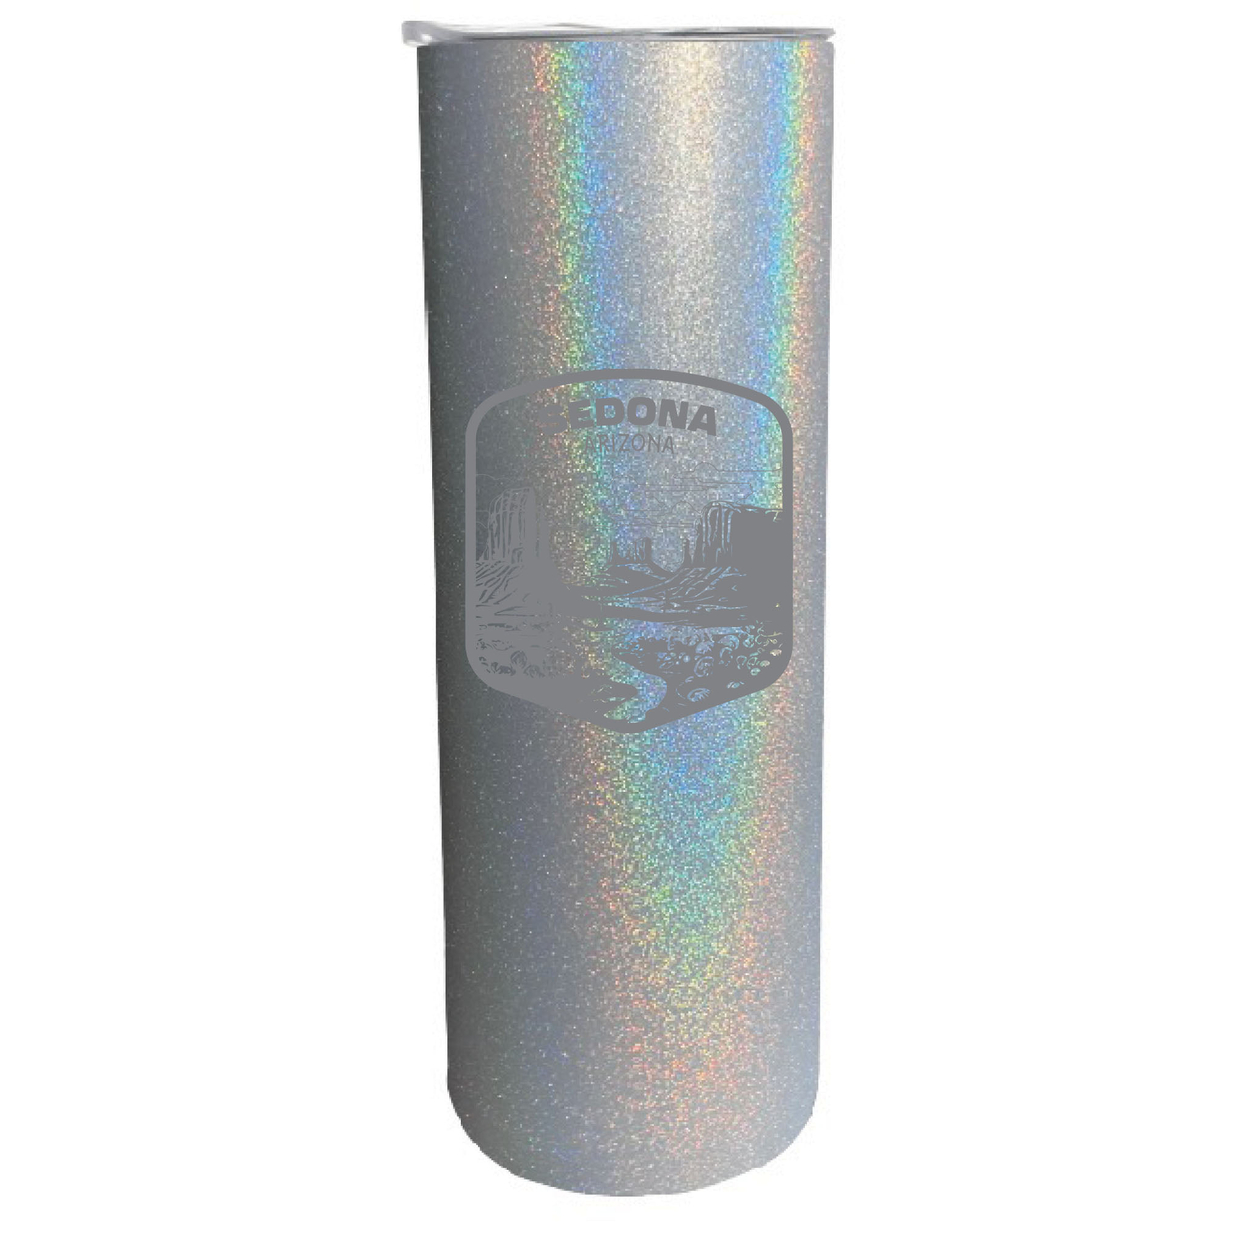 Sedona Arizona Souvenir 20 Oz Engraved Insulated Stainless Steel Skinny Tumbler - Gray Glitter,,Single Unit